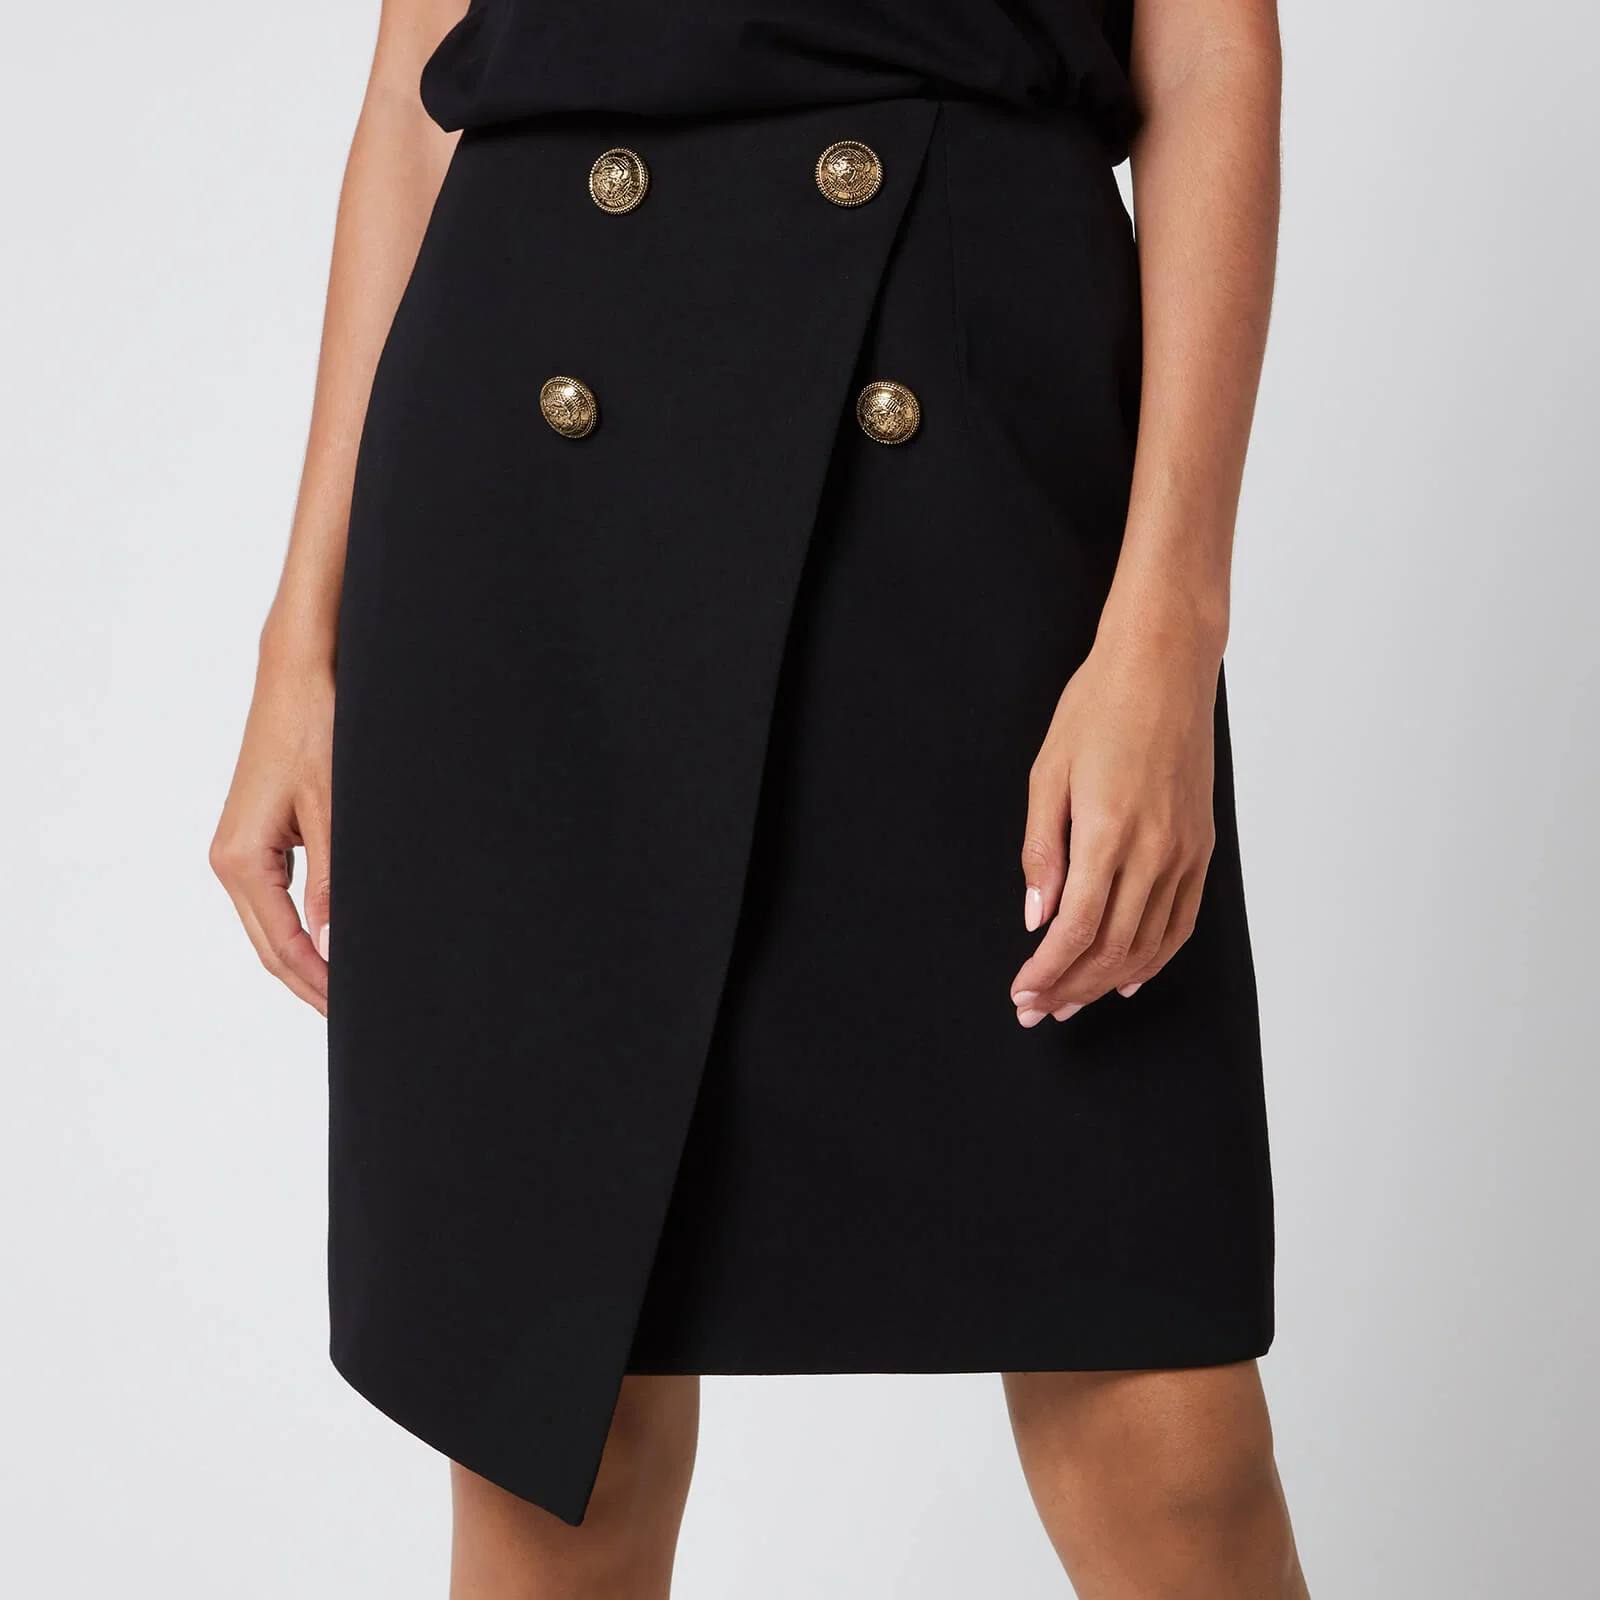 Balmain Women's Asymmetric 4 Button Knee Length Skirt - Black Image 1